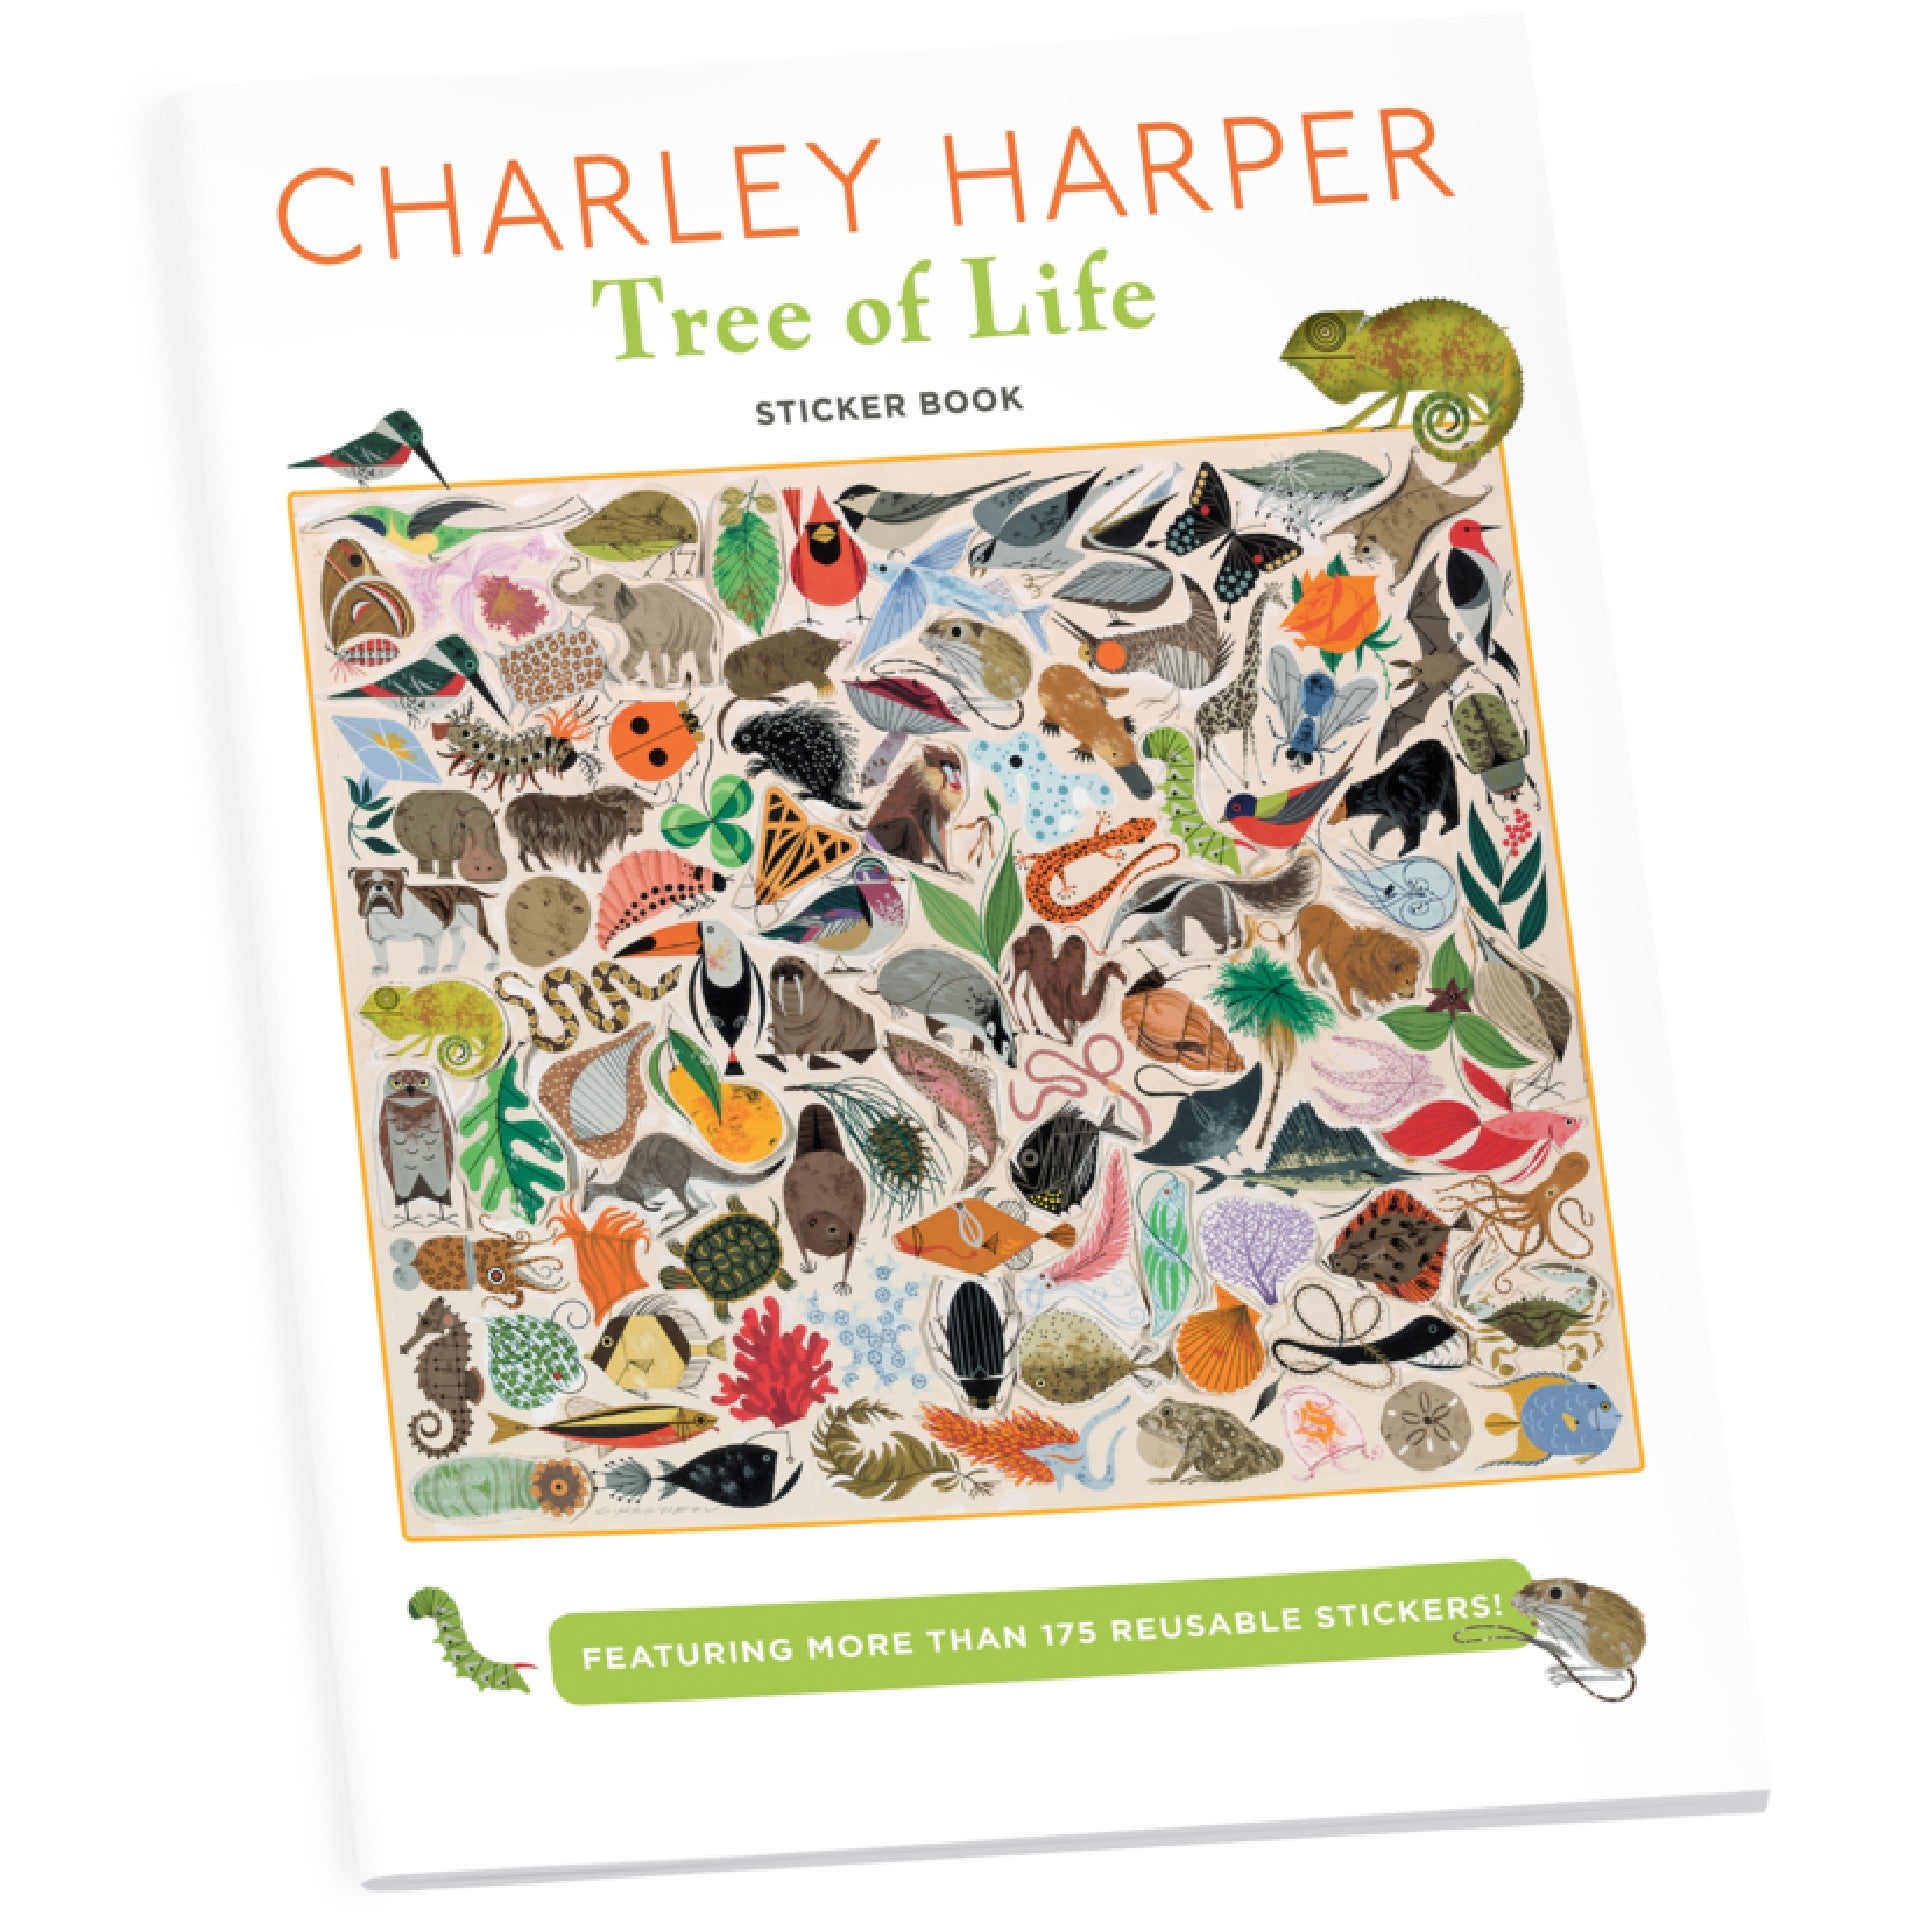 Charley Harper's Tree of Life Sticker Book